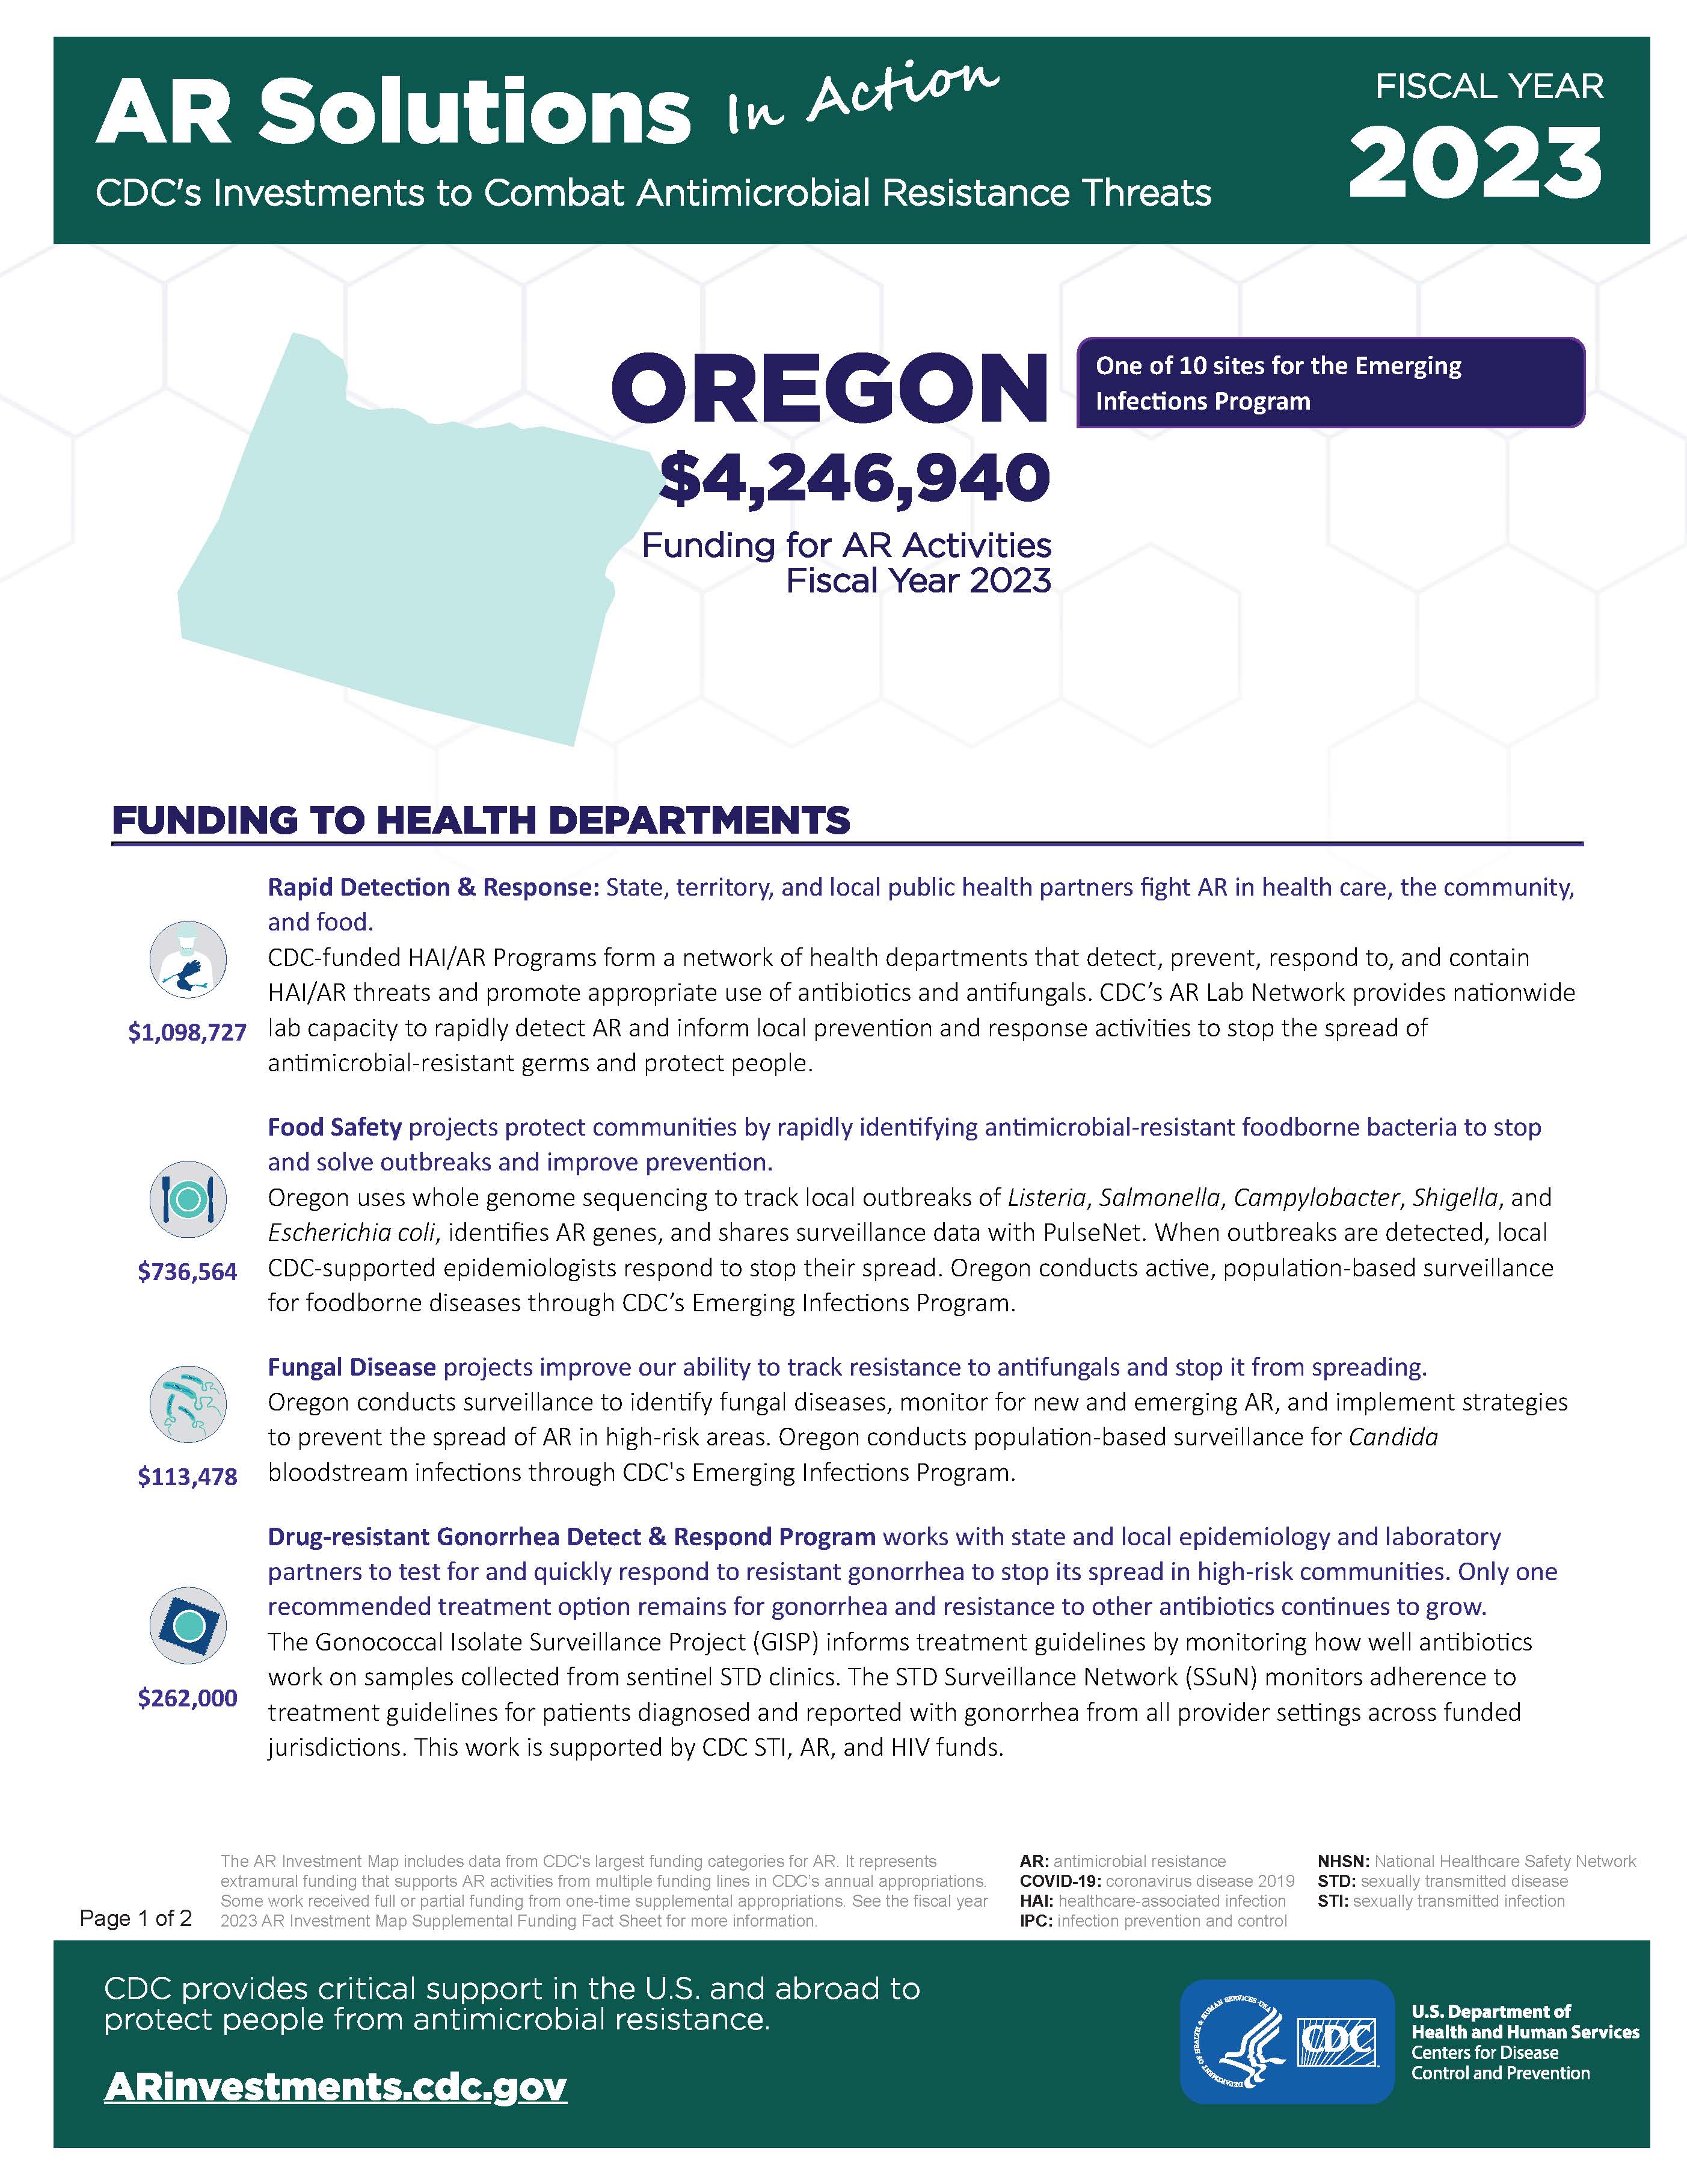 View Factsheet for Oregon